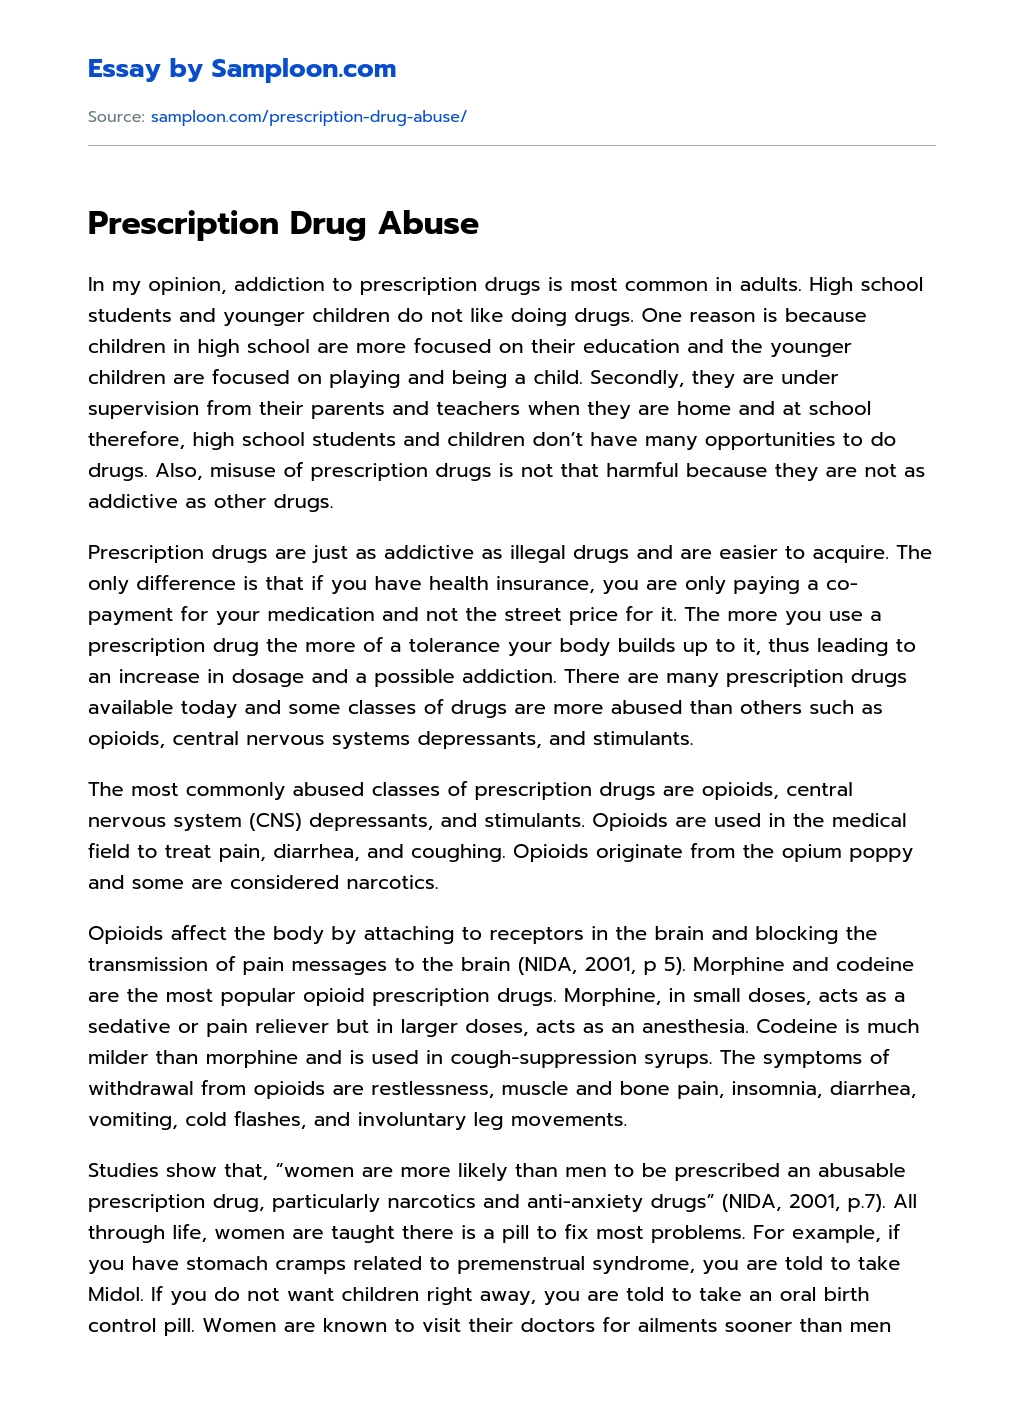 Prescription Drug Abuse essay